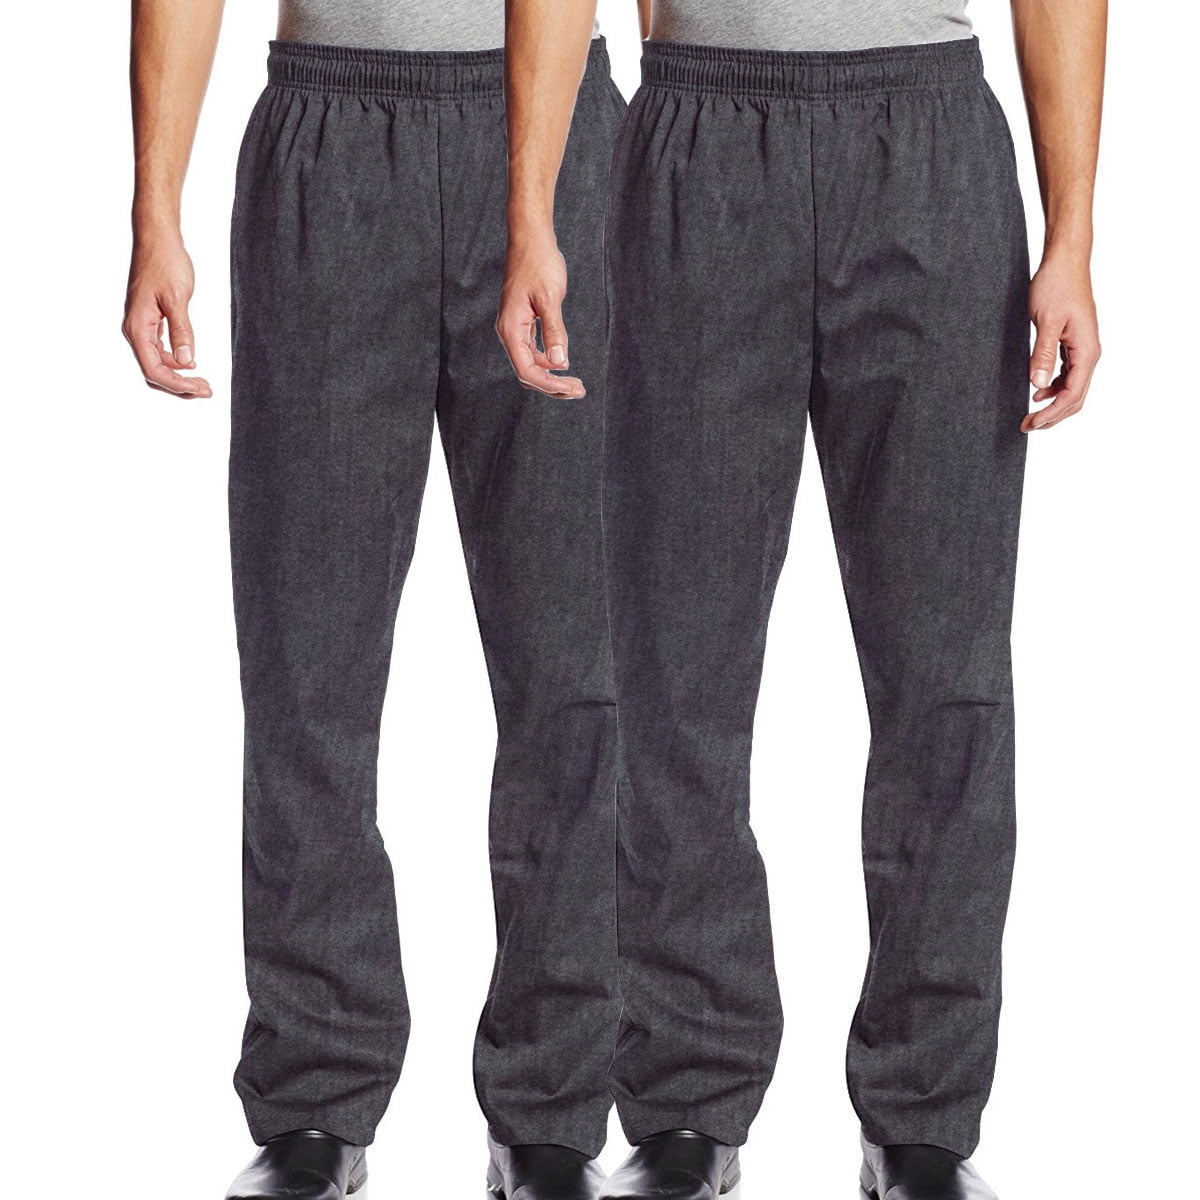 Zipper Chef Pants Unisex Medium Black Pockets Elastic Waist New All Star Uniform 